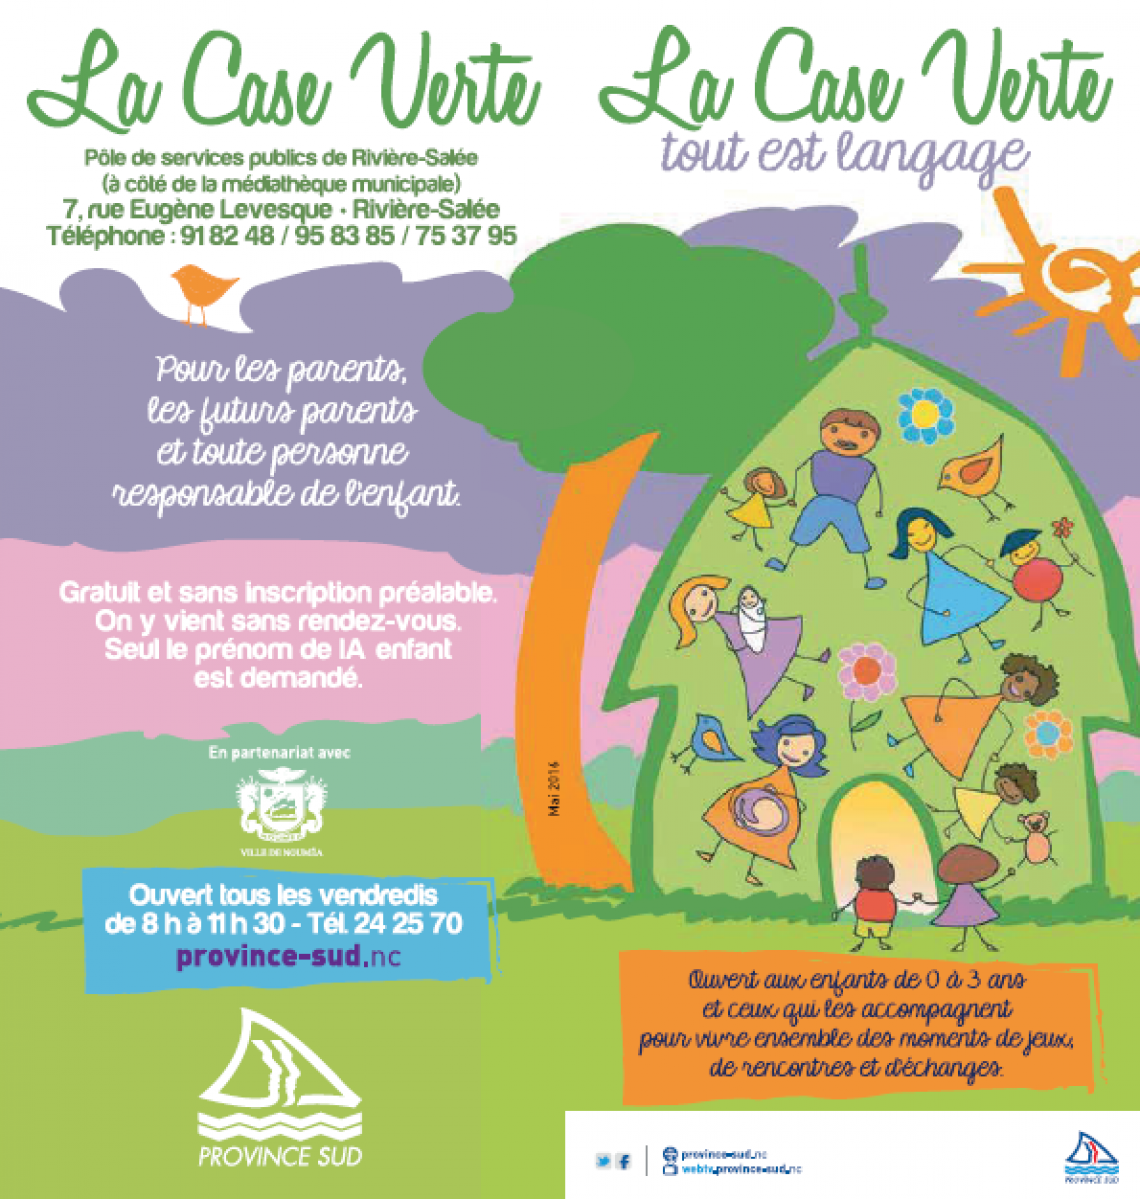 Brochure La Case Verte